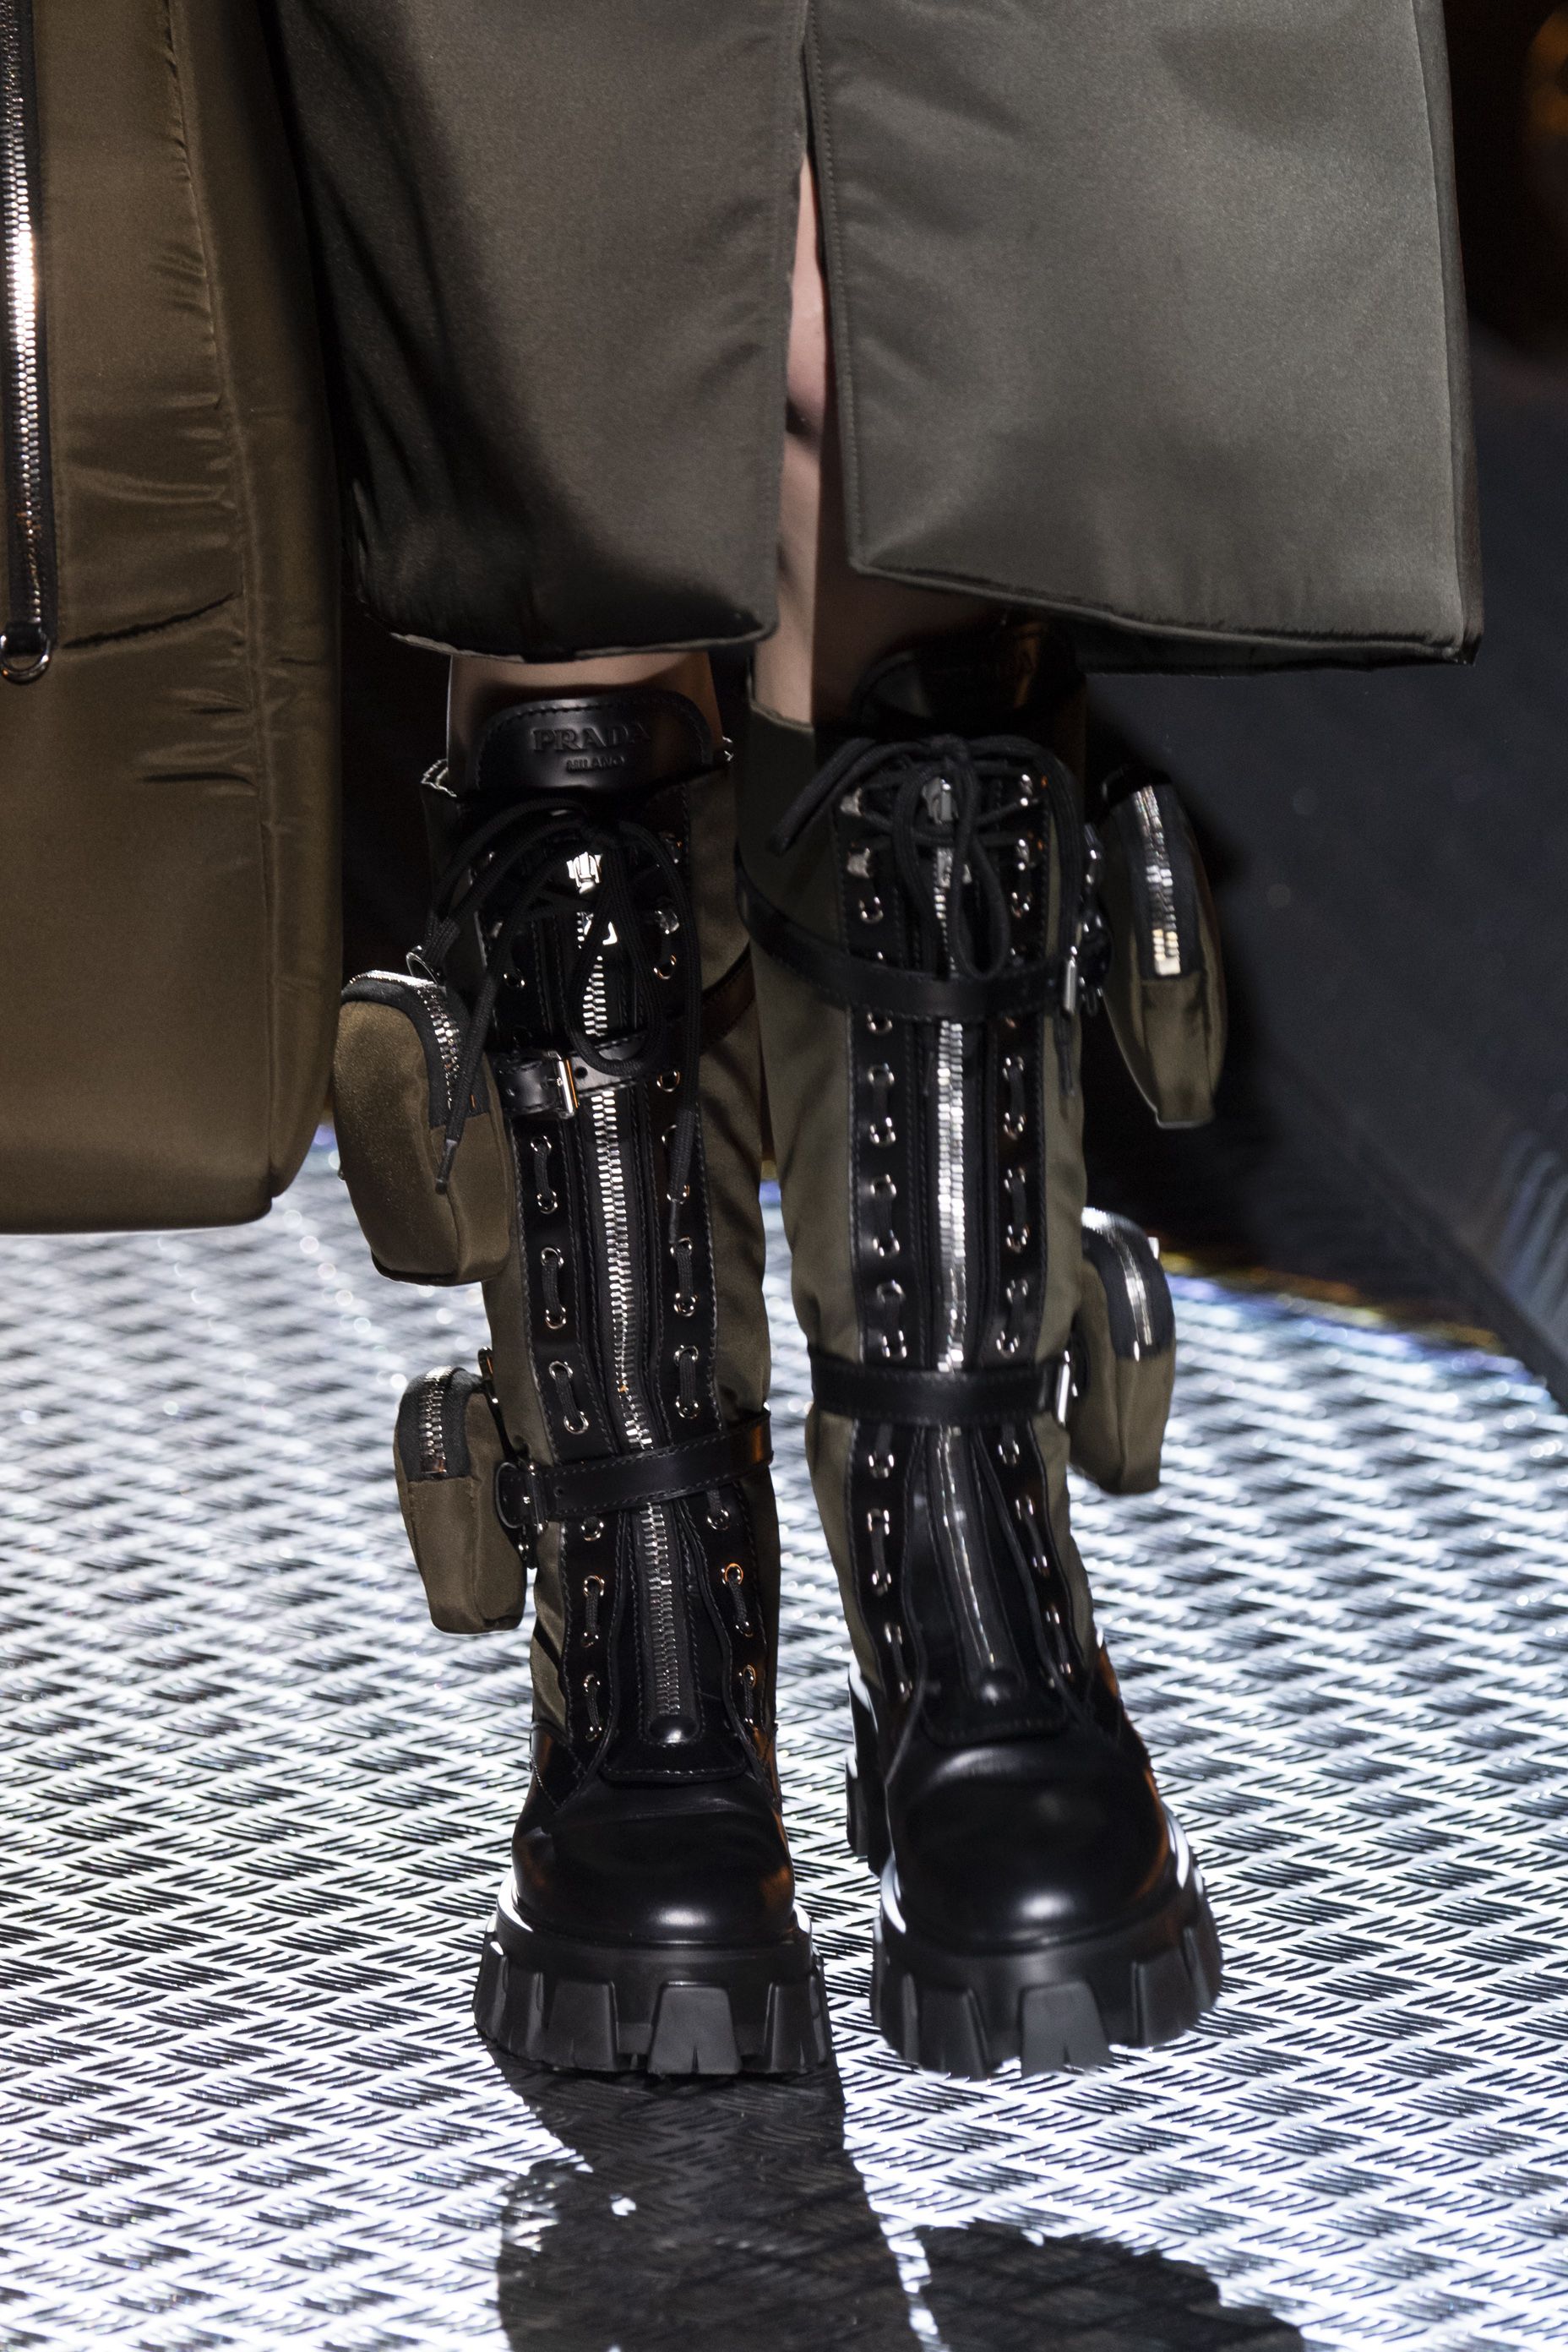 prada boots women's 2019